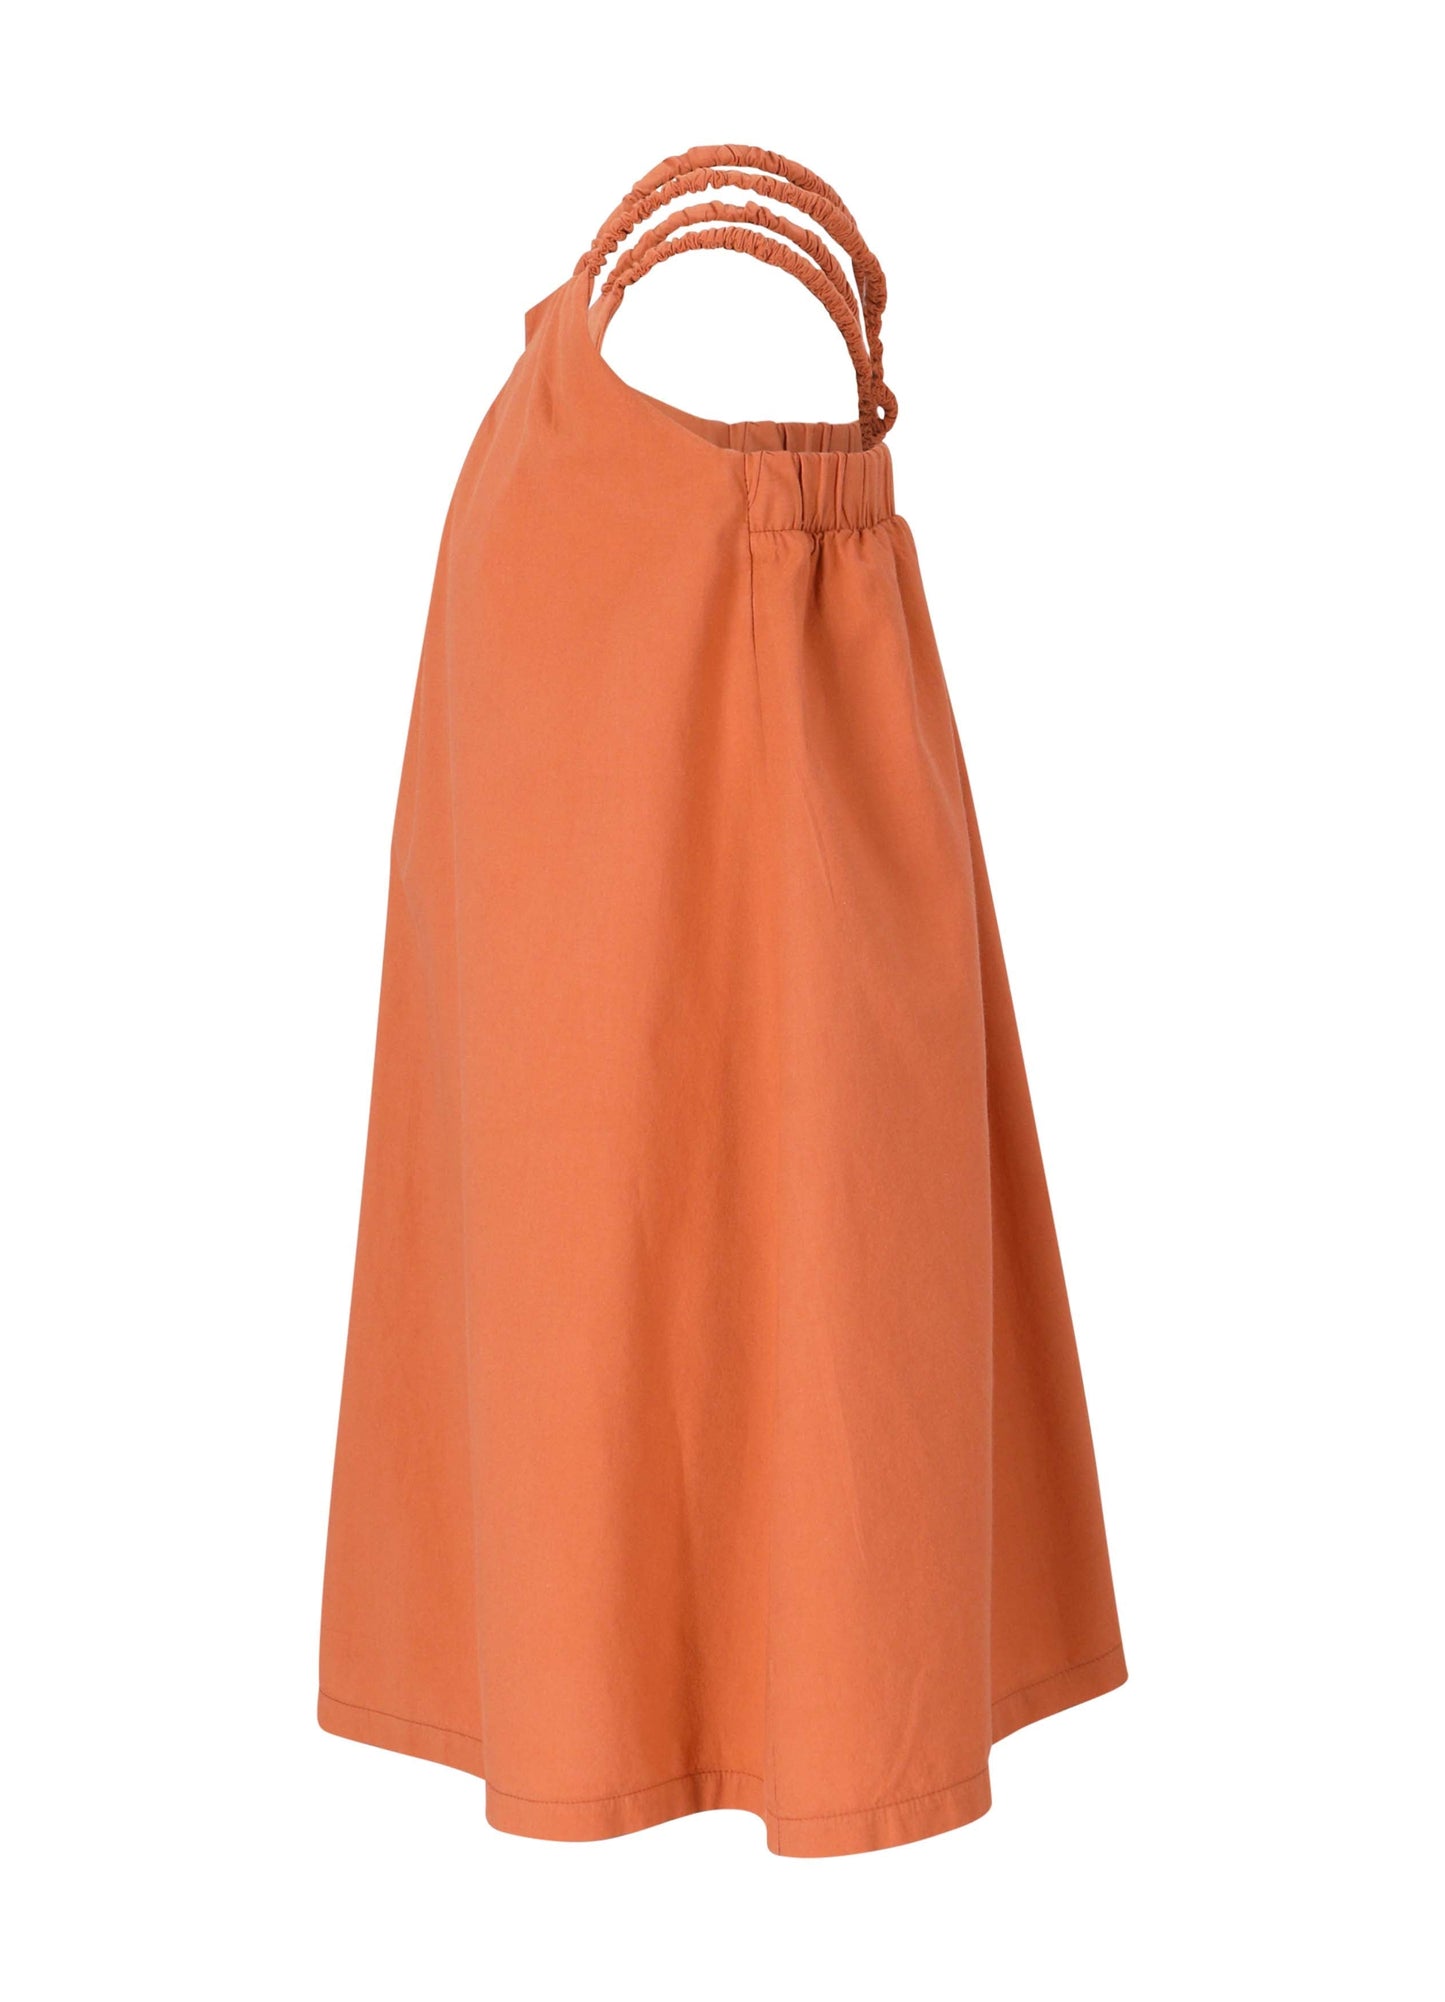 Dress No. 14 - Caramel Dresses LMN3 